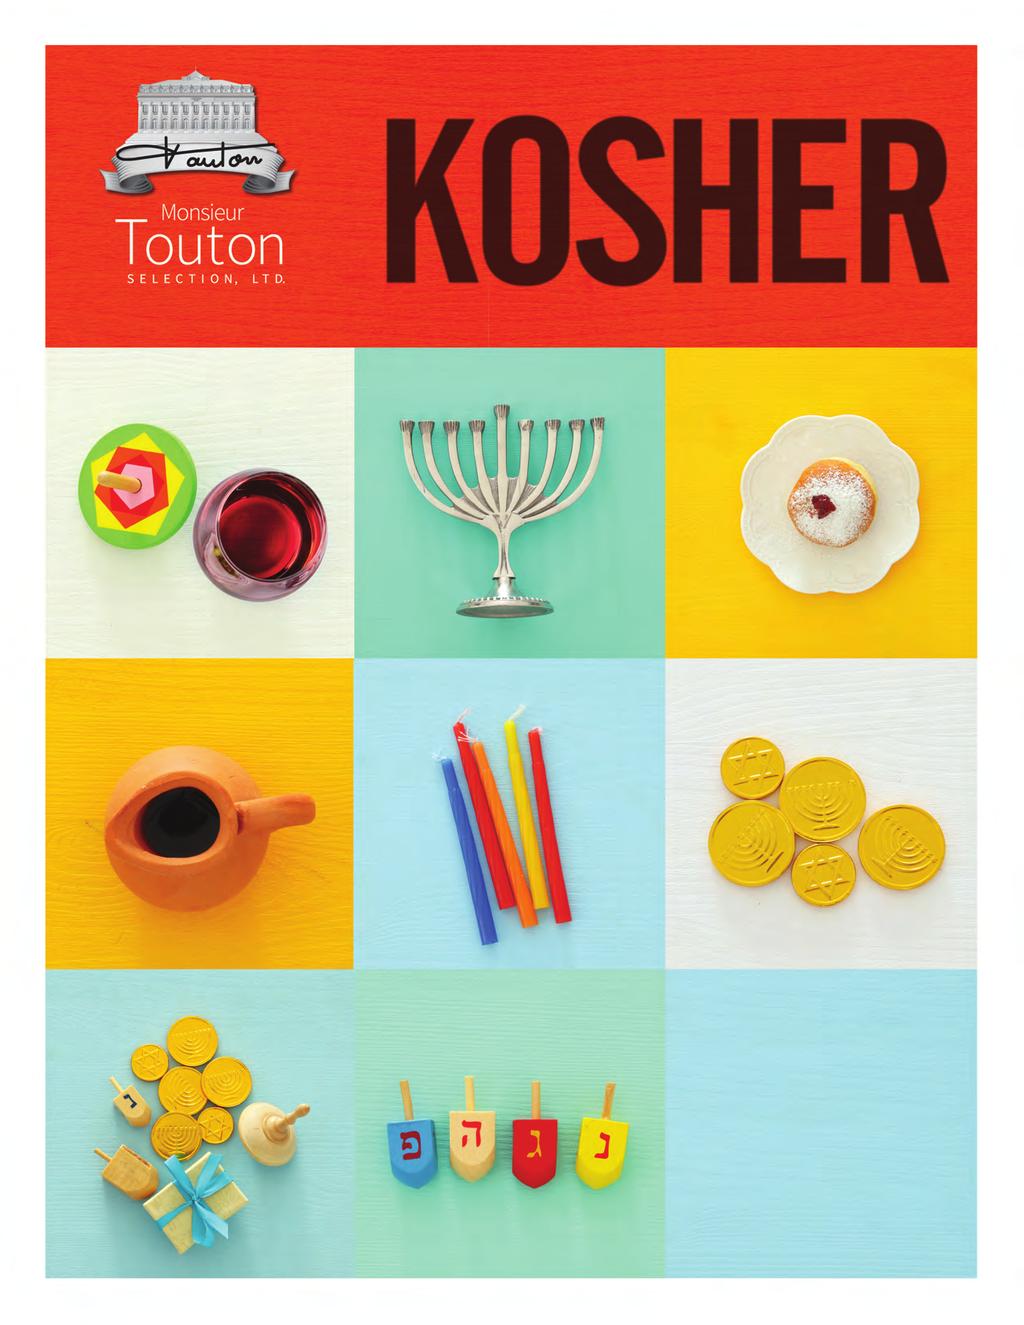 ALL WINES ARE KOSHER FOR PASSOVER KOSHER DECEMBER 2017 CONNECTICUT Hanukkah